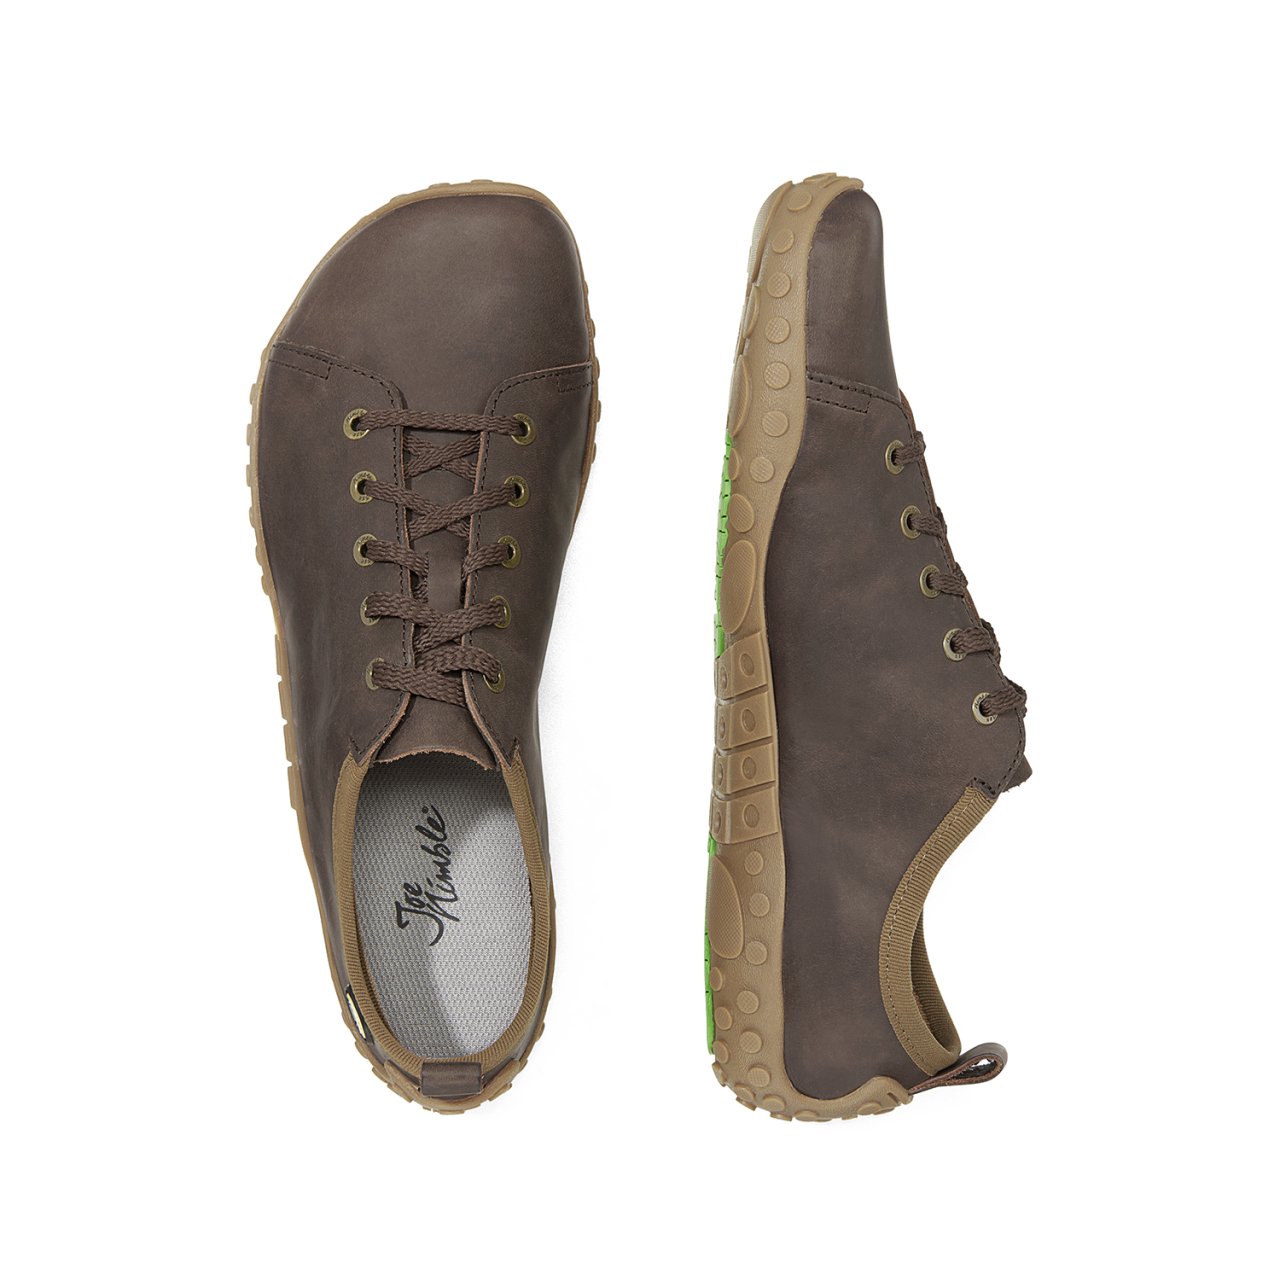 Joe Nimble [m] RelaxToes leather - dunkel brown | 1719-289 |